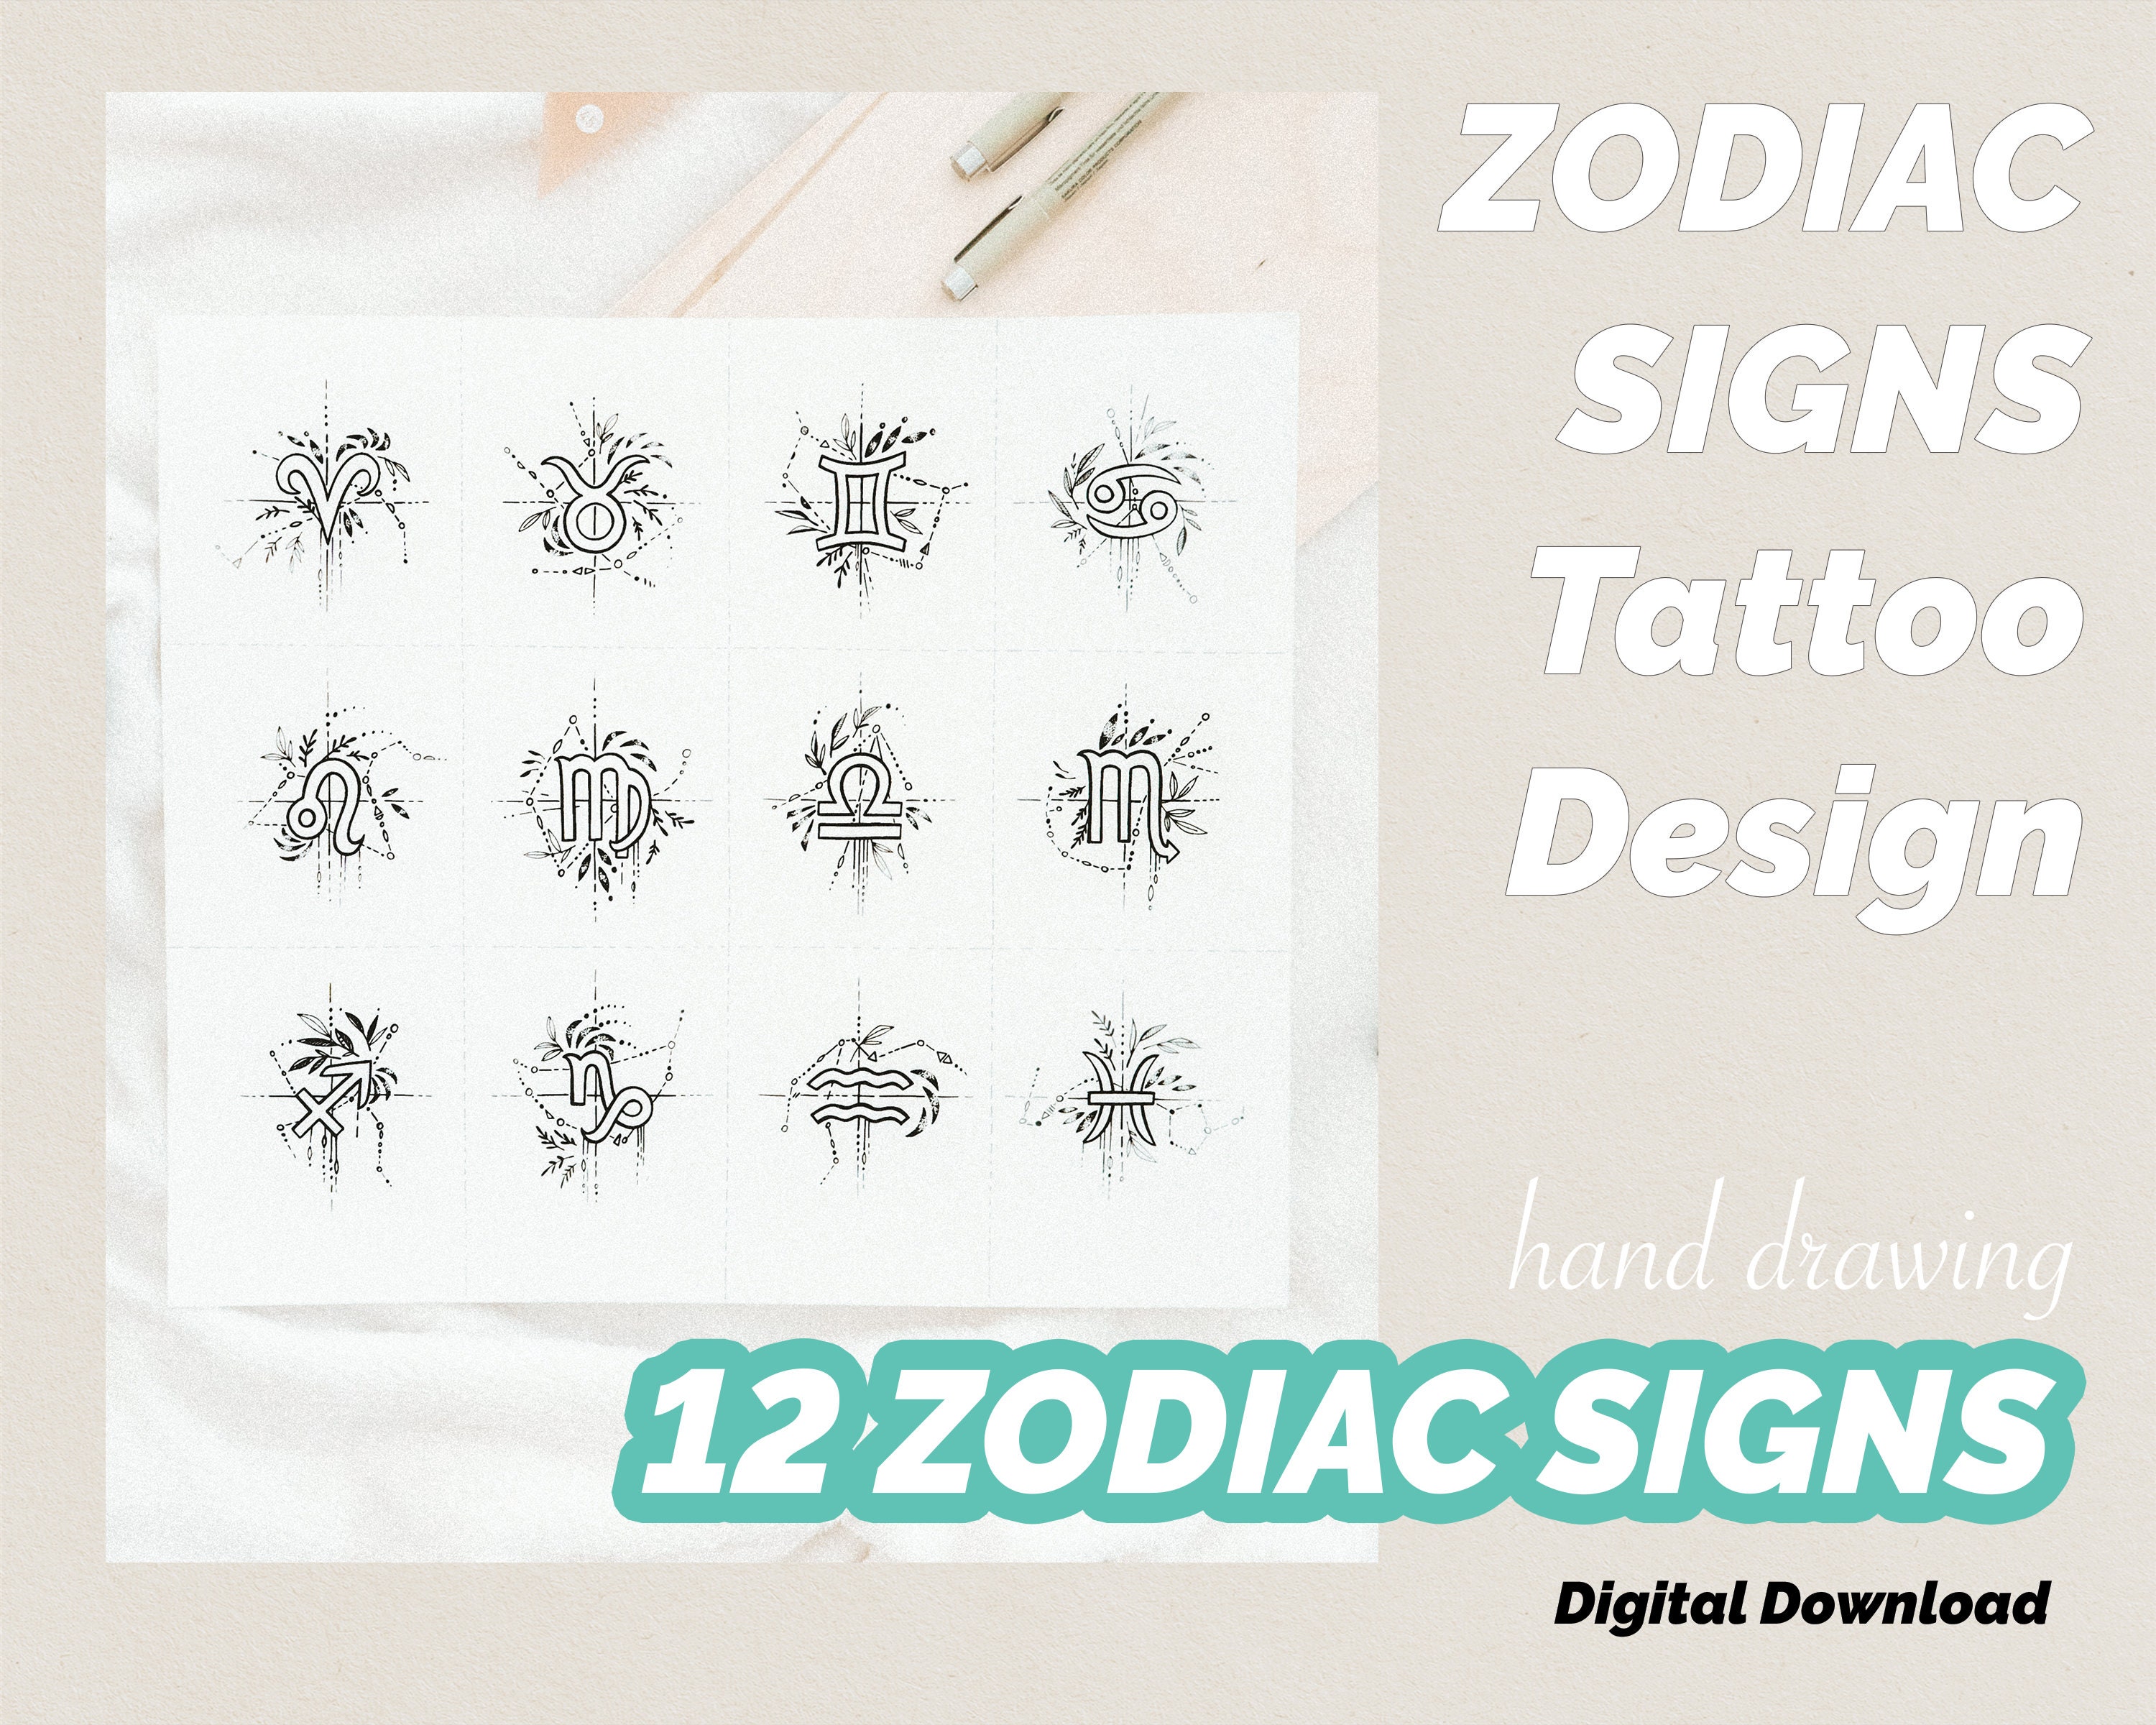 30 Meaningful Cancer Zodiac Tattoo Ideas | YourTango